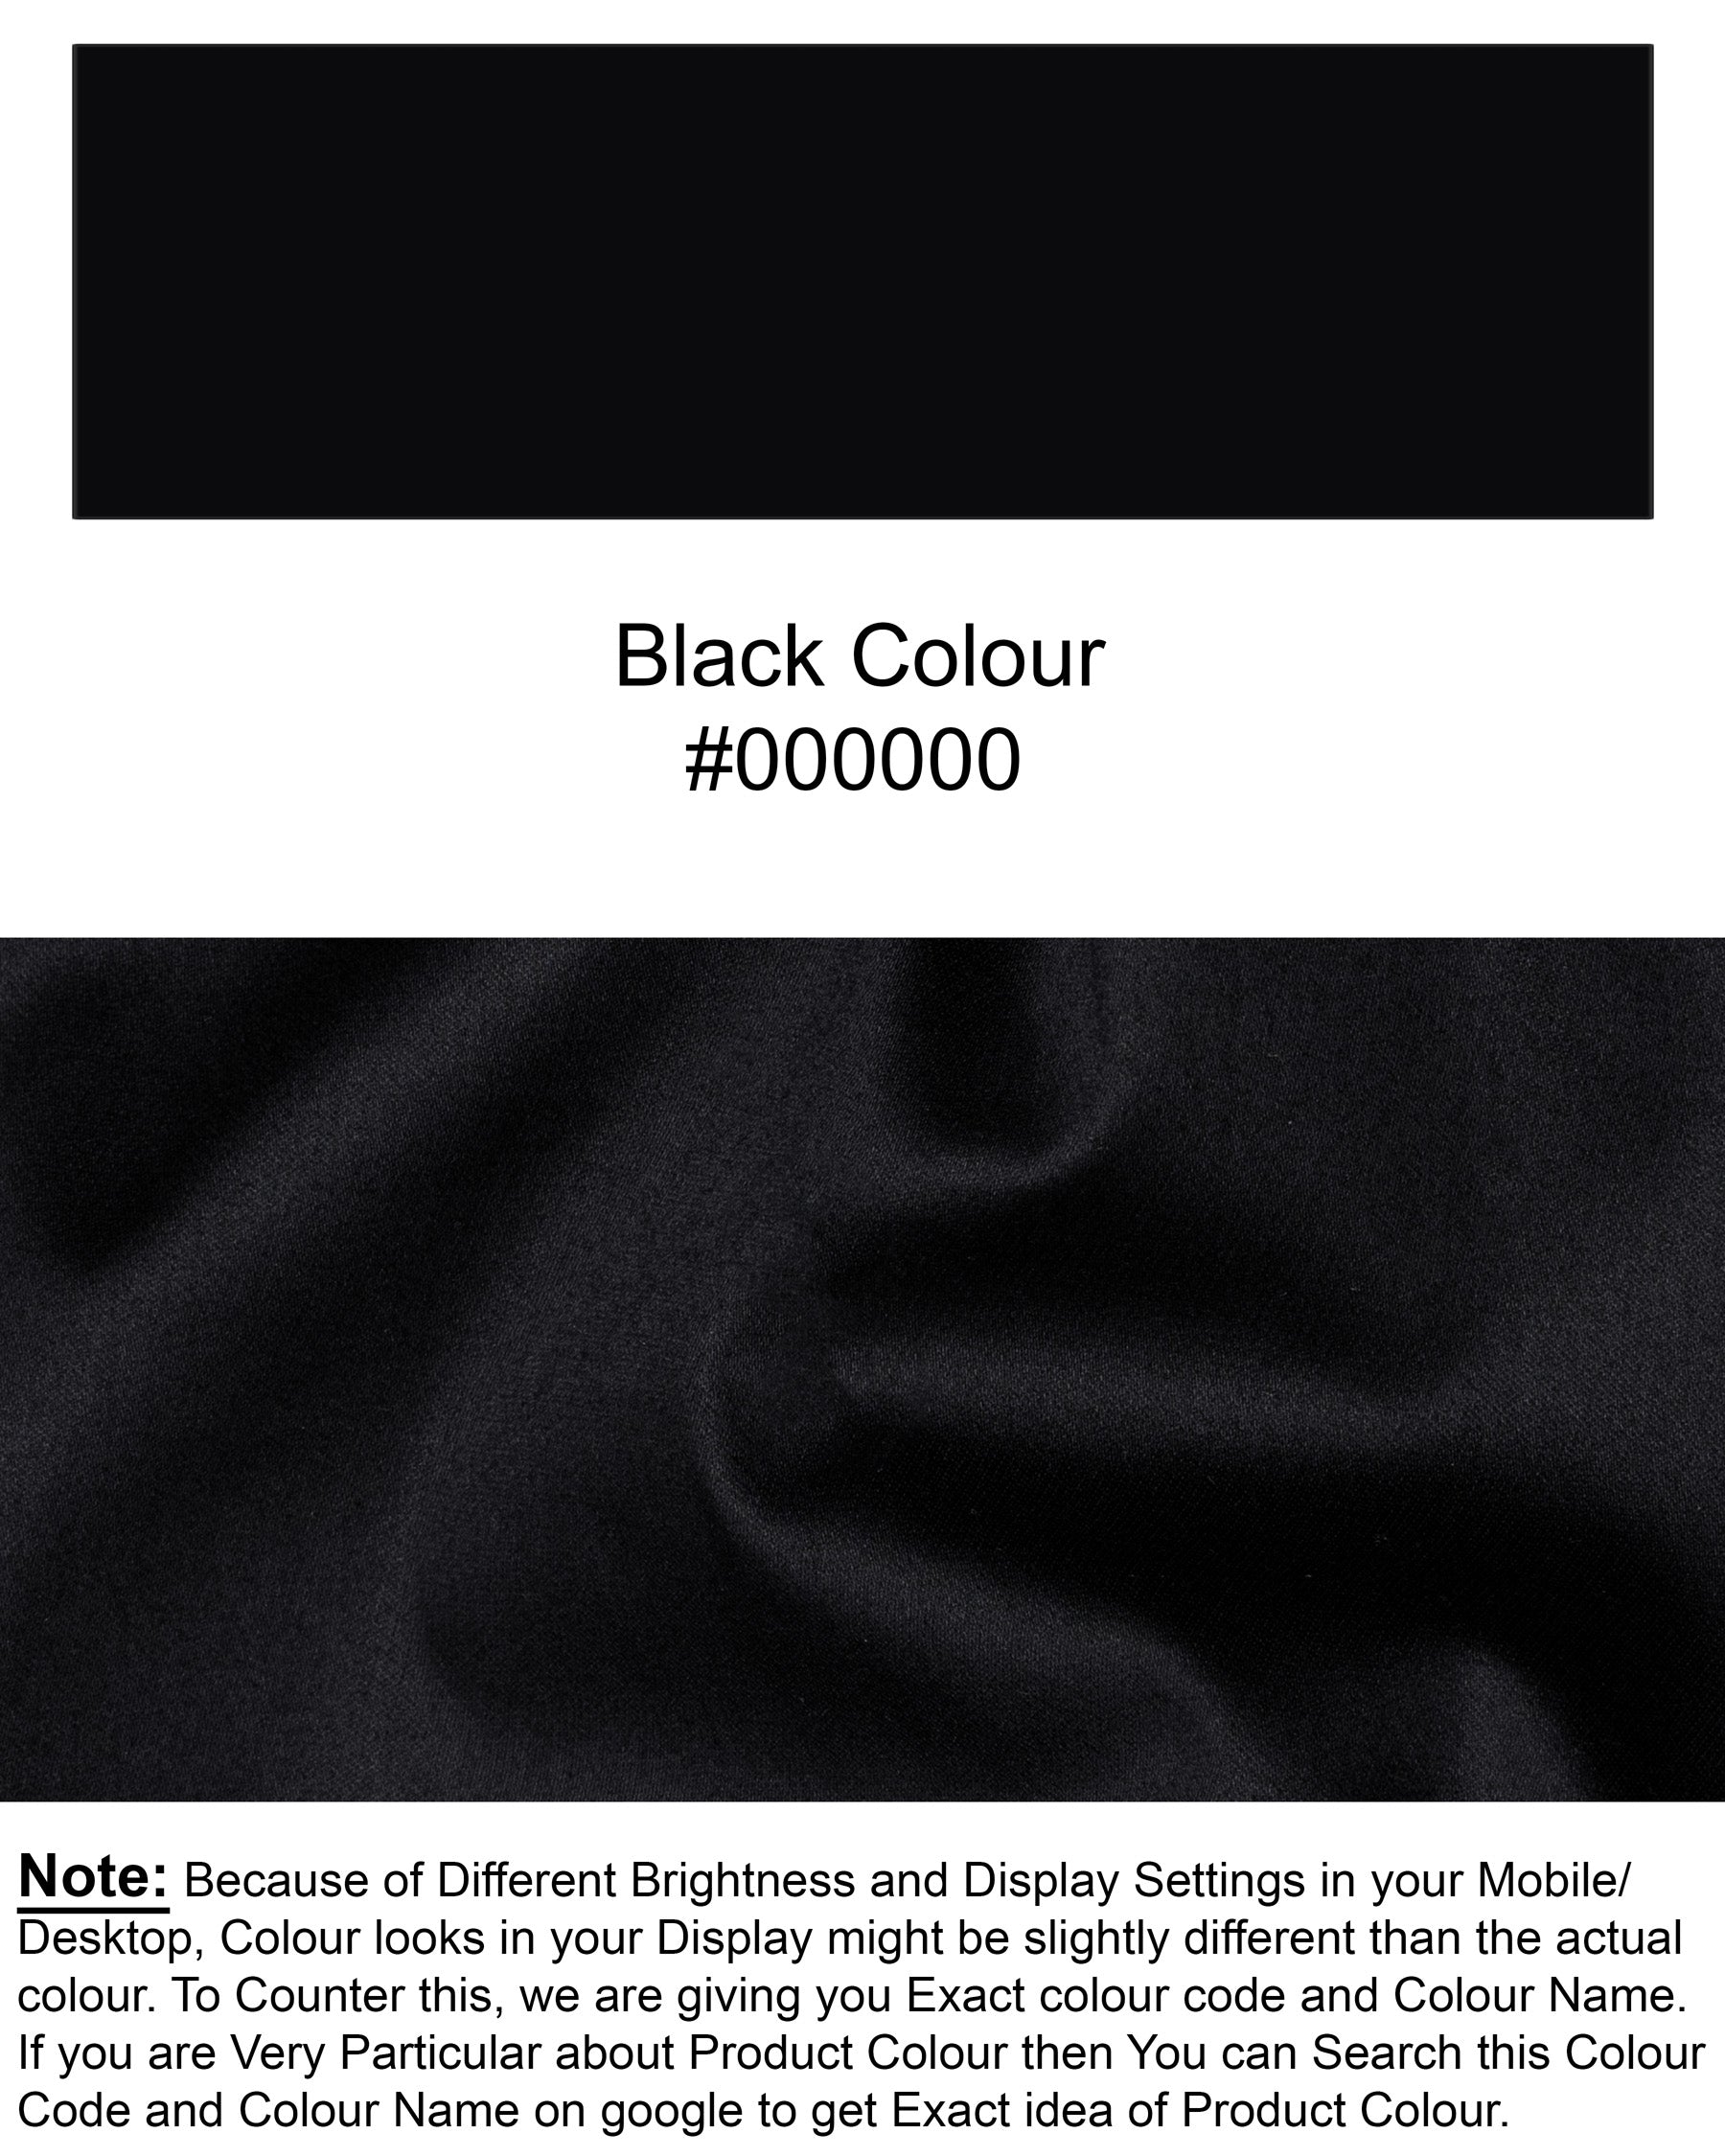 Jade Black Super Soft Premium Cotton Shirt 5820-BD-38, 5820-BD-H-38, 5820-BD-39, 5820-BD-H-39, 5820-BD-40, 5820-BD-H-40, 5820-BD-42, 5820-BD-H-42, 5820-BD-44, 5820-BD-H-44, 5820-BD-46, 5820-BD-H-46, 5820-BD-48, 5820-BD-H-48, 5820-BD-50, 5820-BD-H-50, 5820-BD-52, 5820-BD-H-52